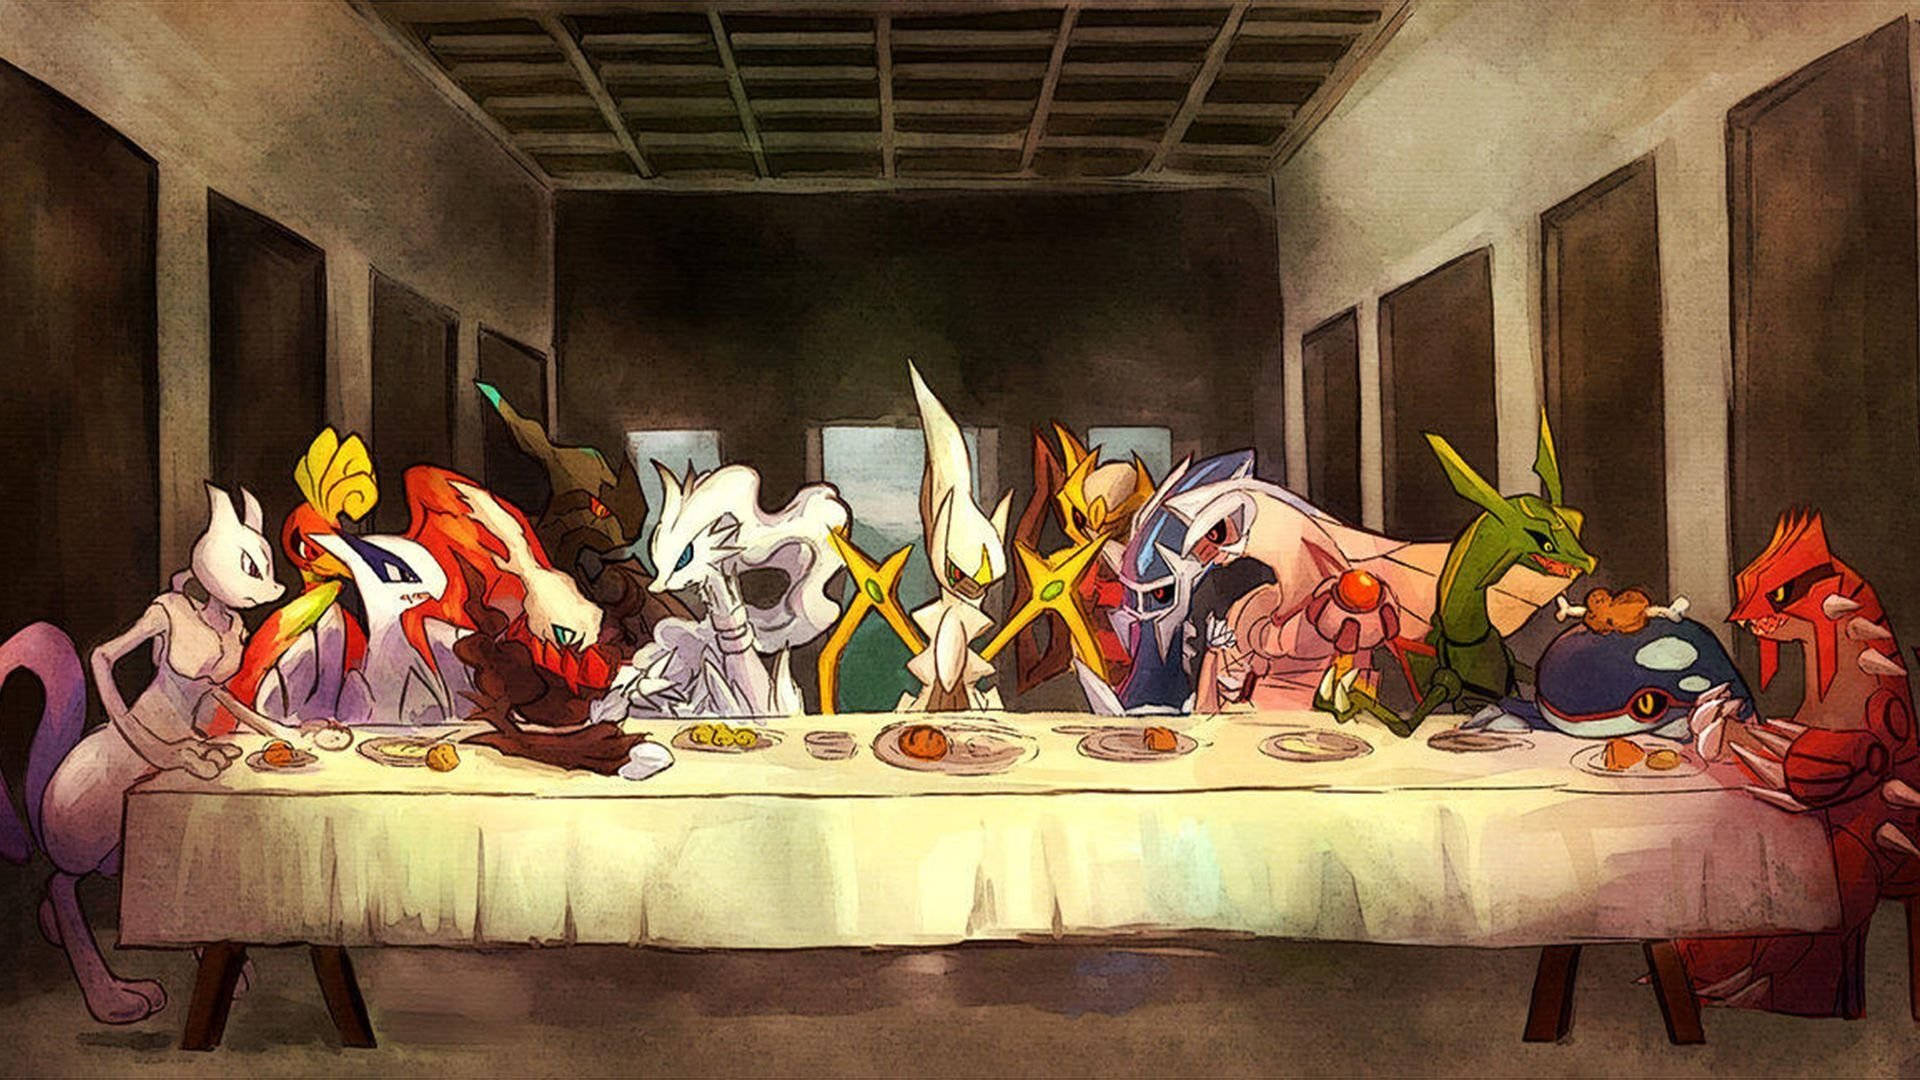 Dialga, The Legendary Pokémon, And The Last Supper Background